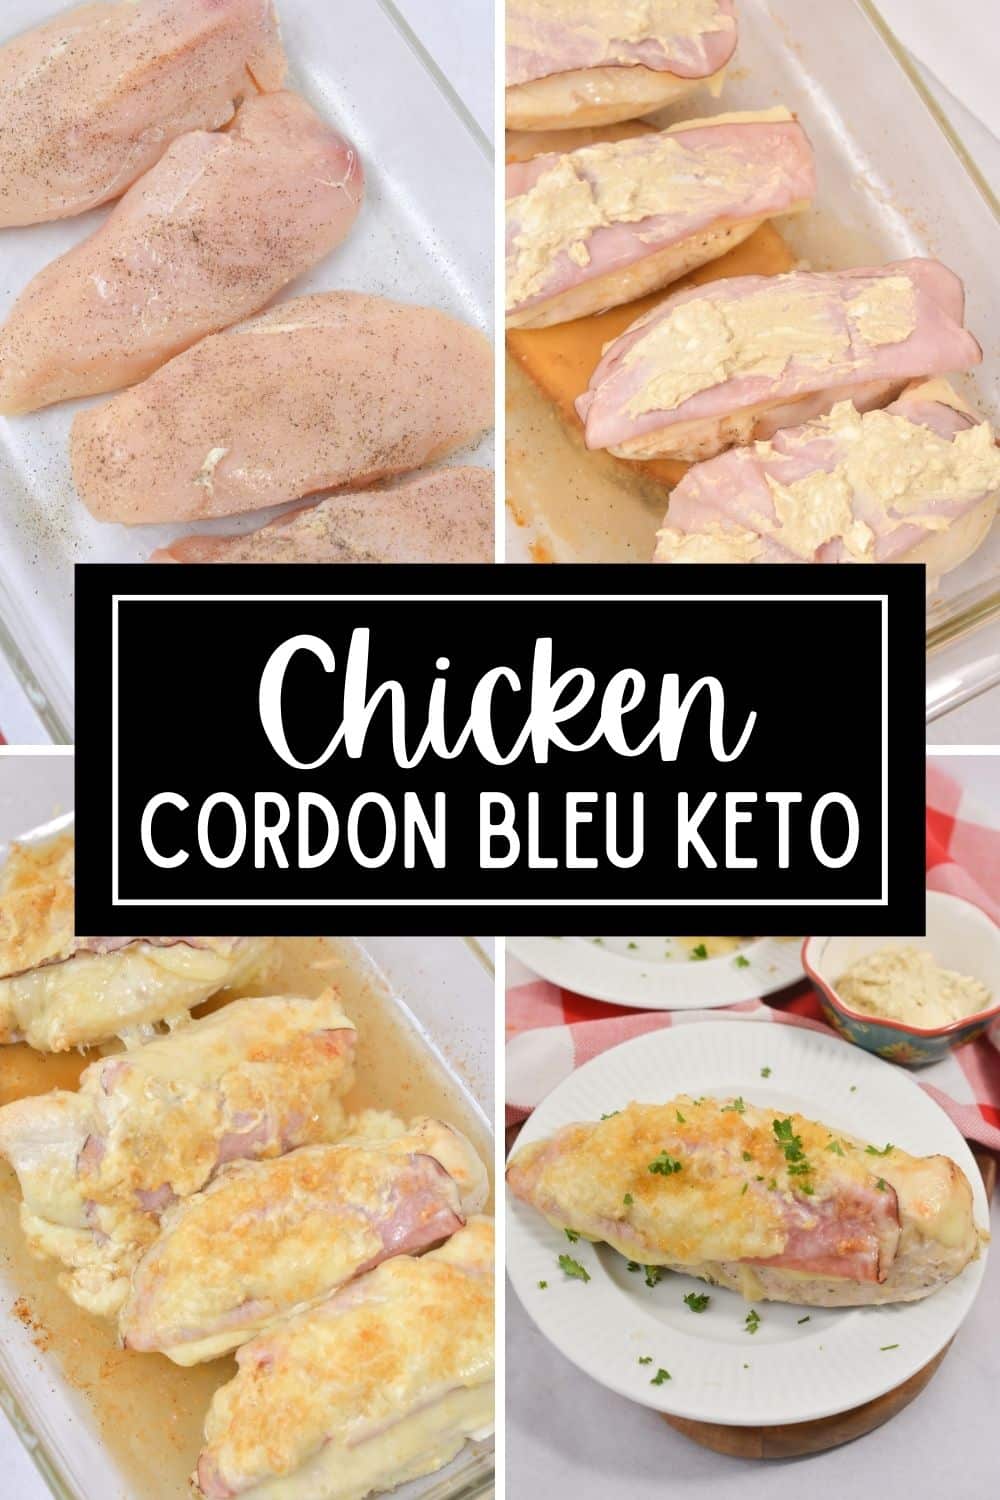 Chicken cordon bleu made in a keto-friendly manner.